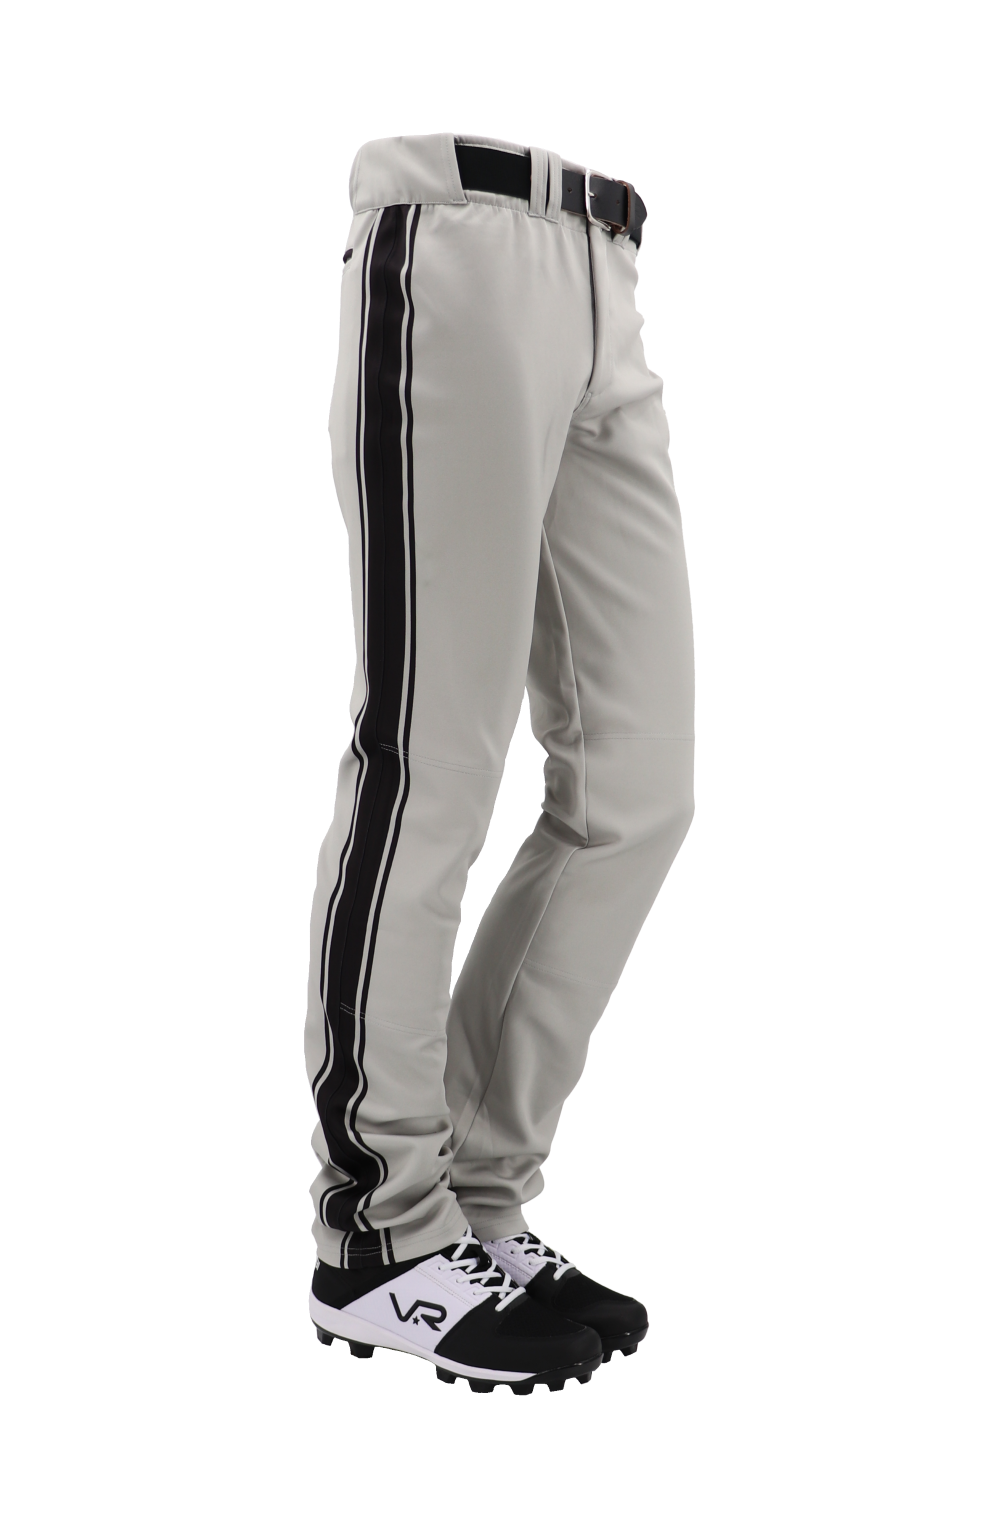 Custom full dye sublimated Baseball Pants with custom stripe design showcasing full dye sublimation capabilities